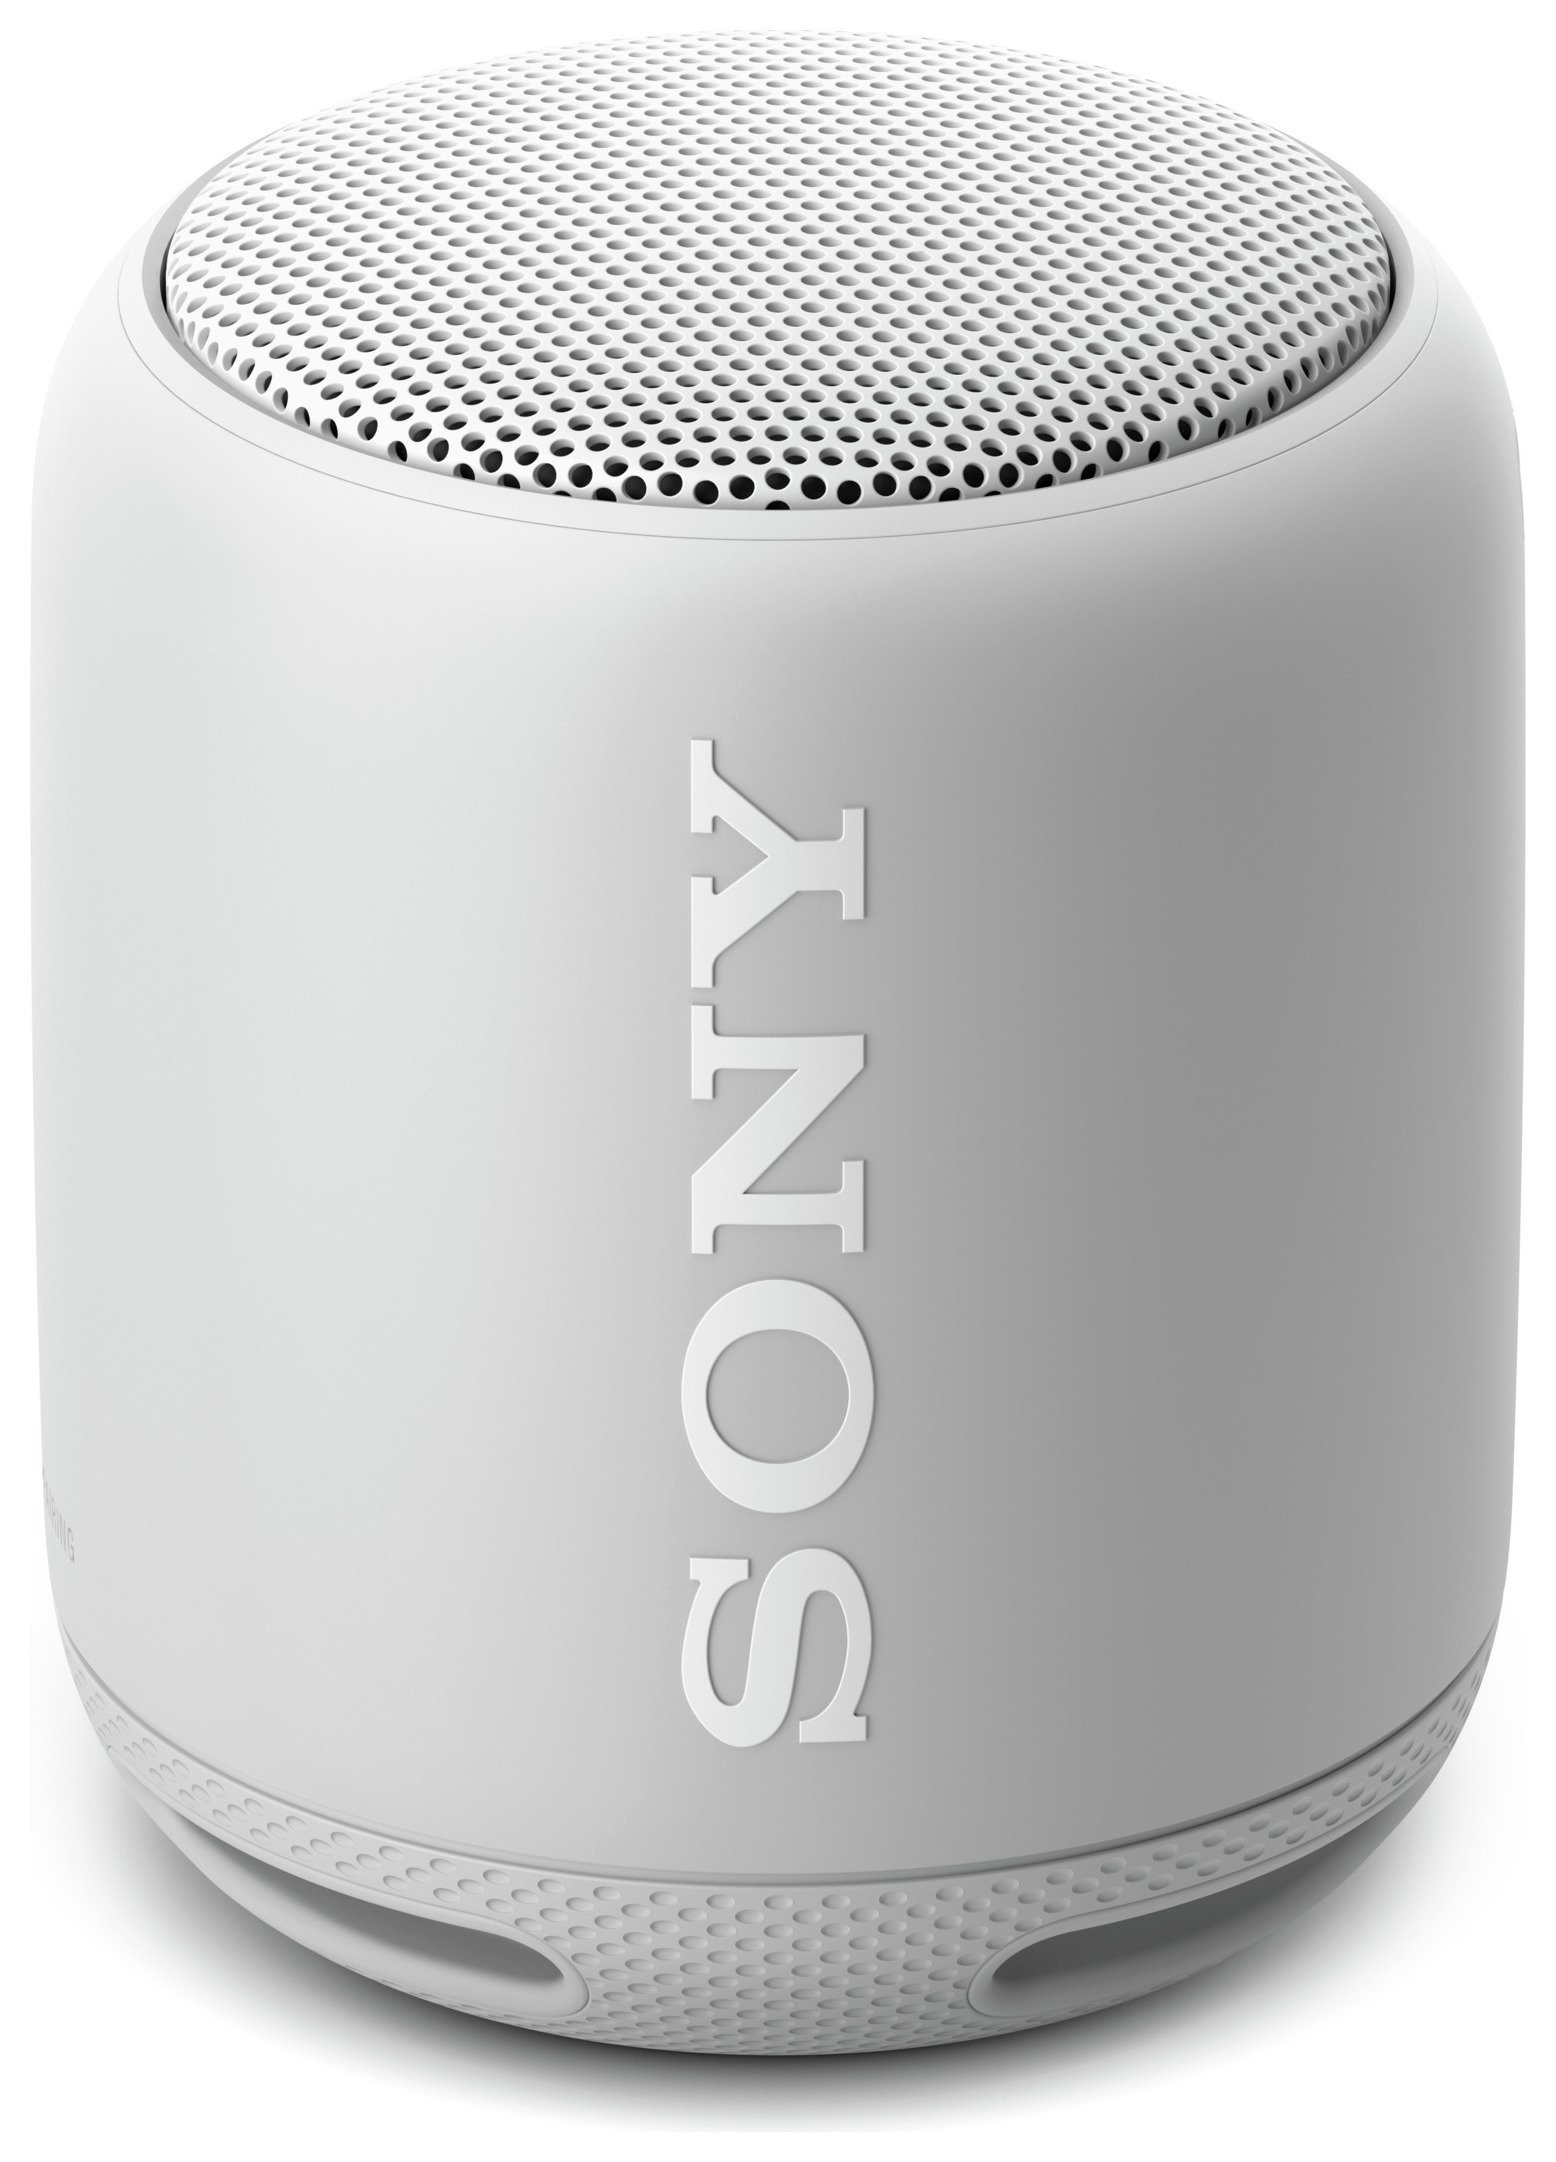 Sony SRS-XB10 Portable Wireless Speaker - White